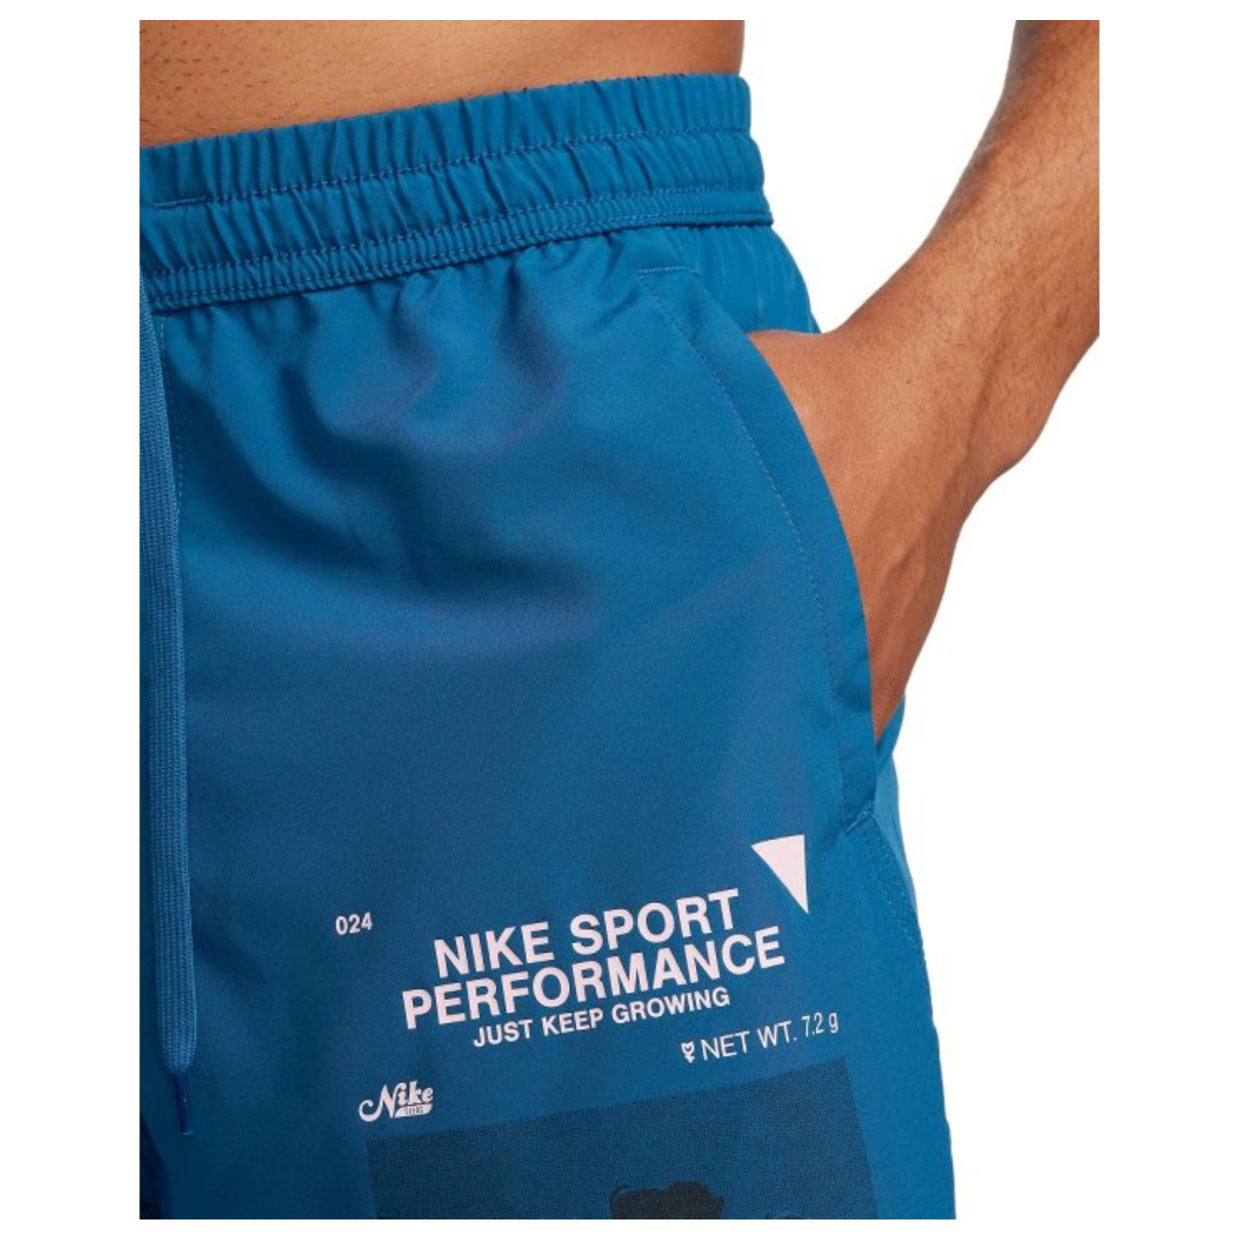 Herren Sporthose Dri-FIT 7" Unlined Versatile Shorts